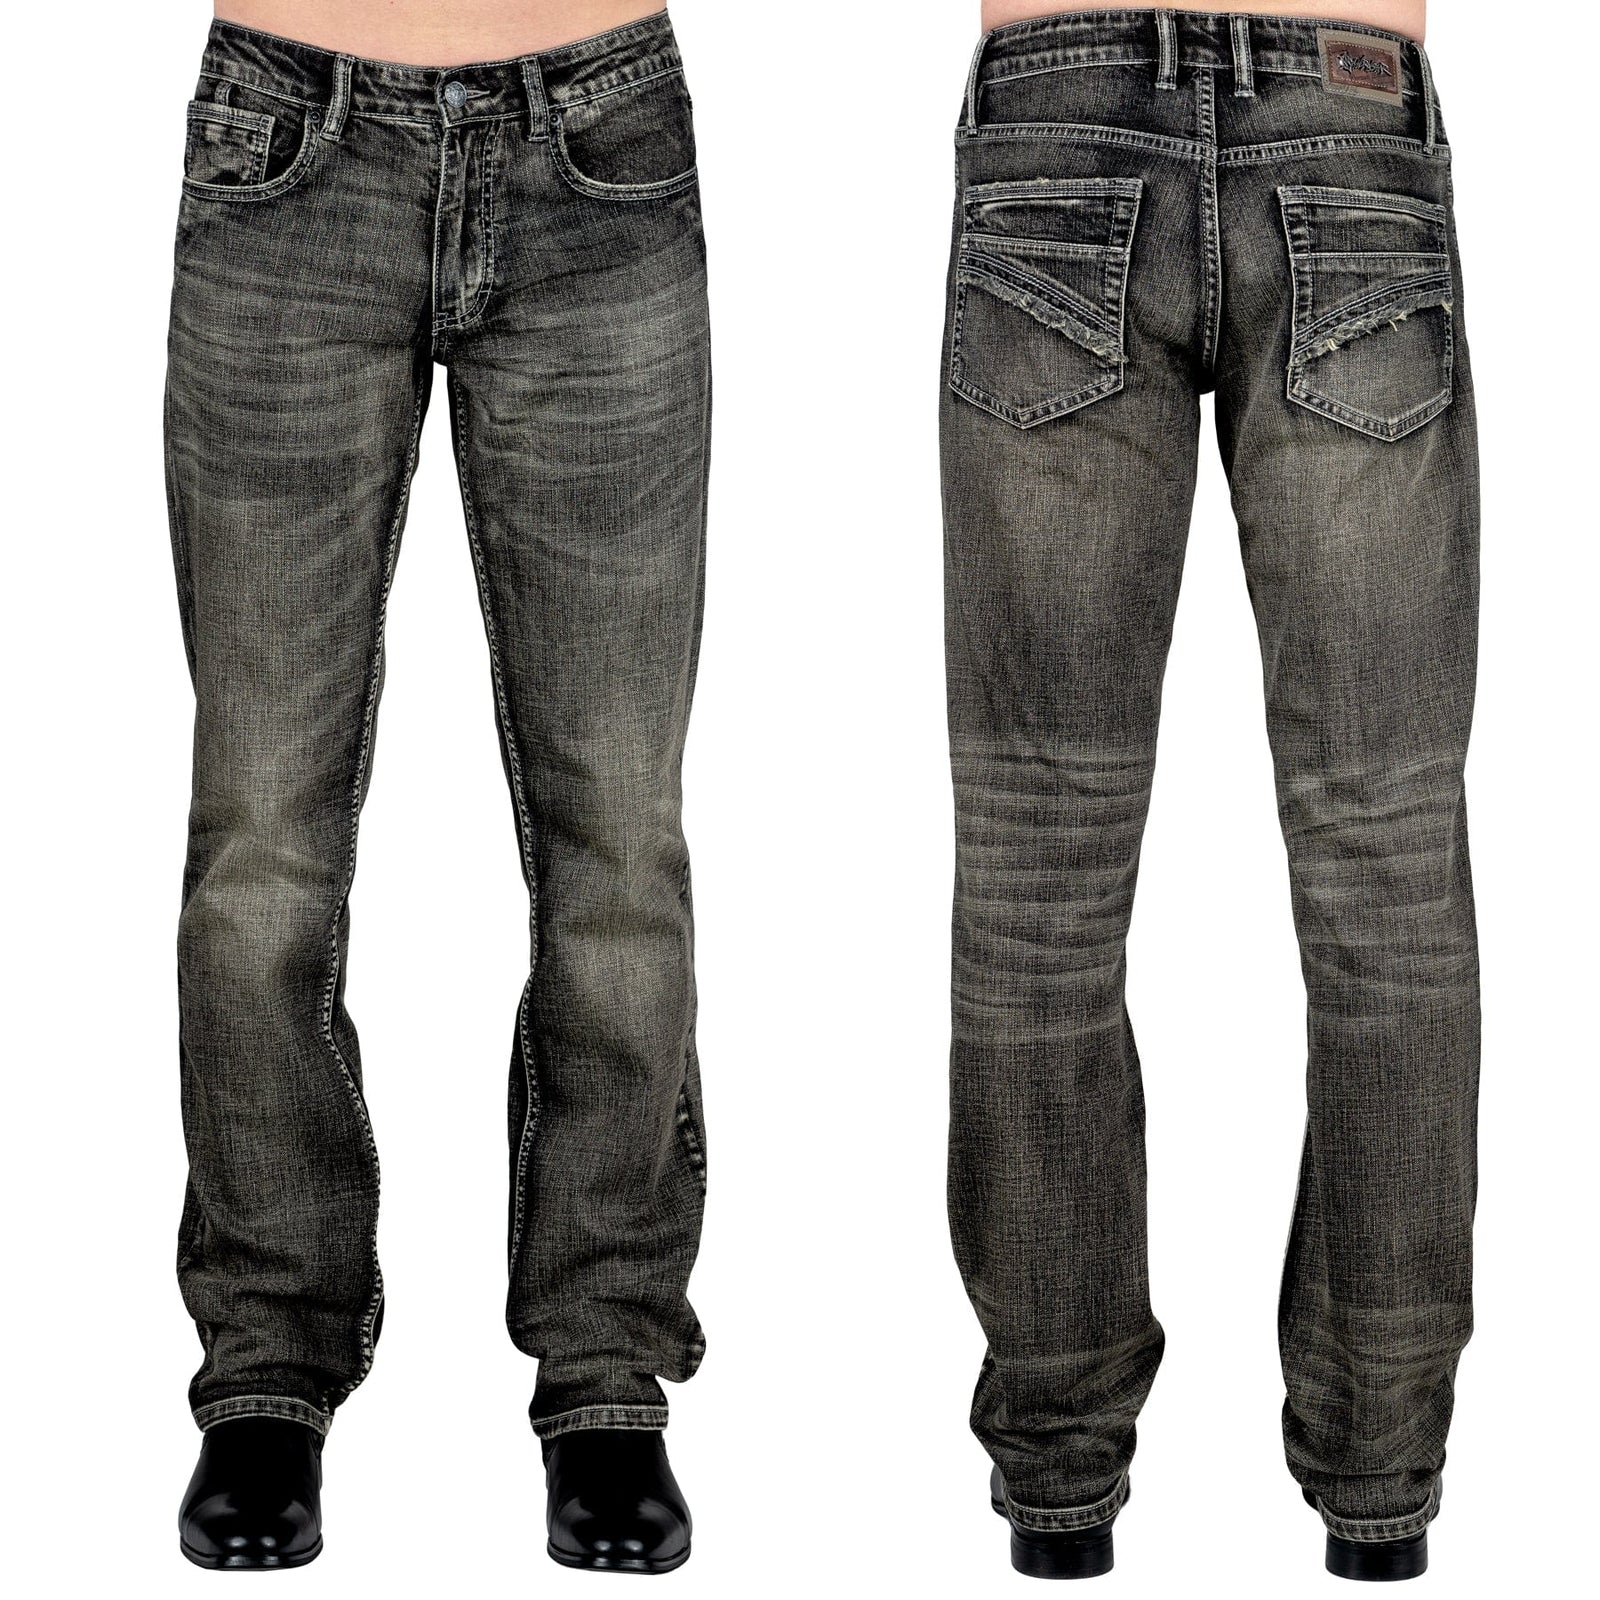 Wornstar Clothing Mens Jeans. Trailblazer Denim Pants - Vintage Black